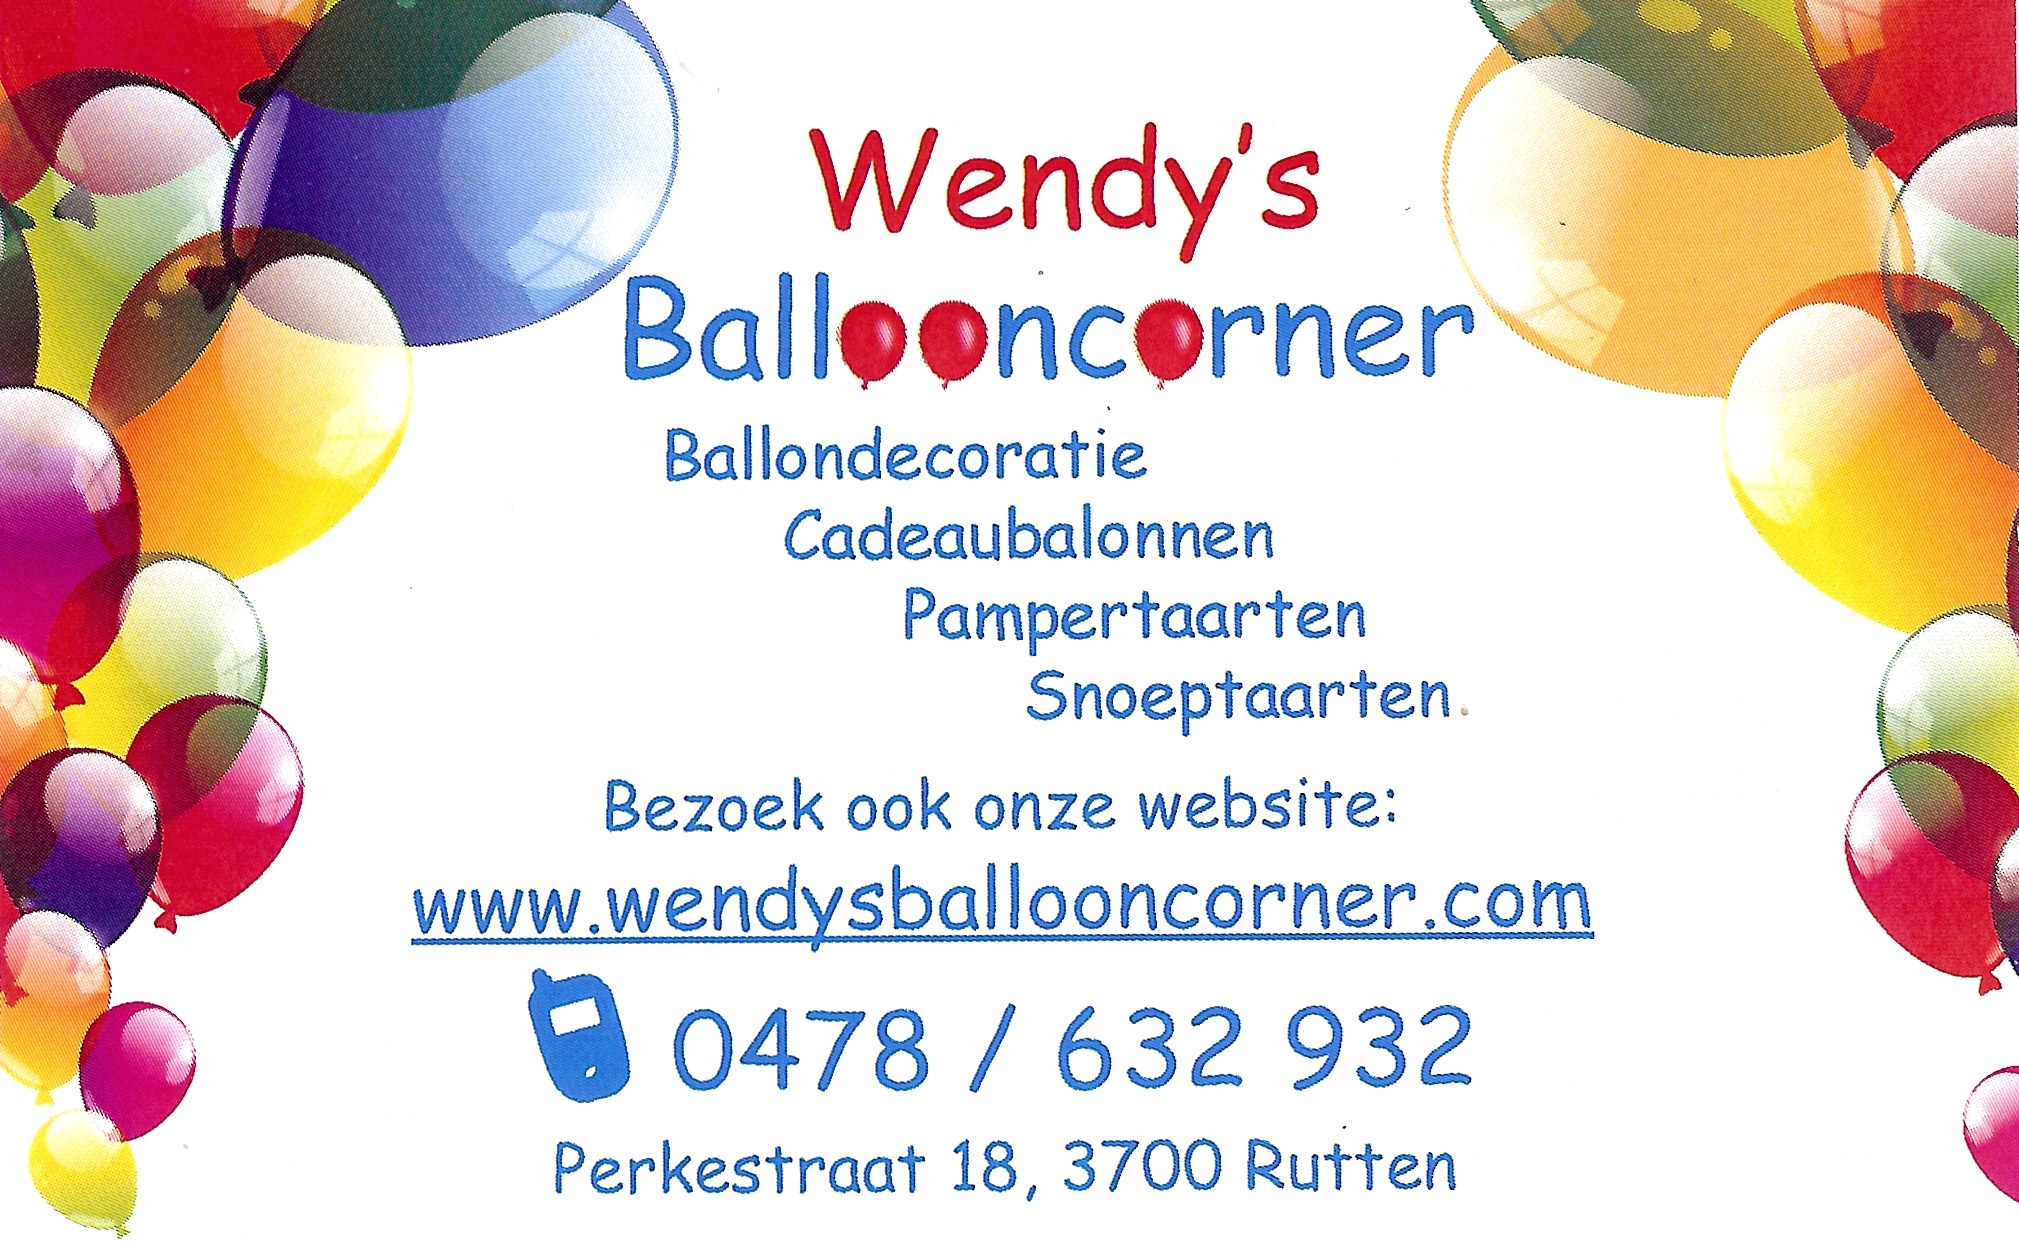 Wendys Ballooncorner